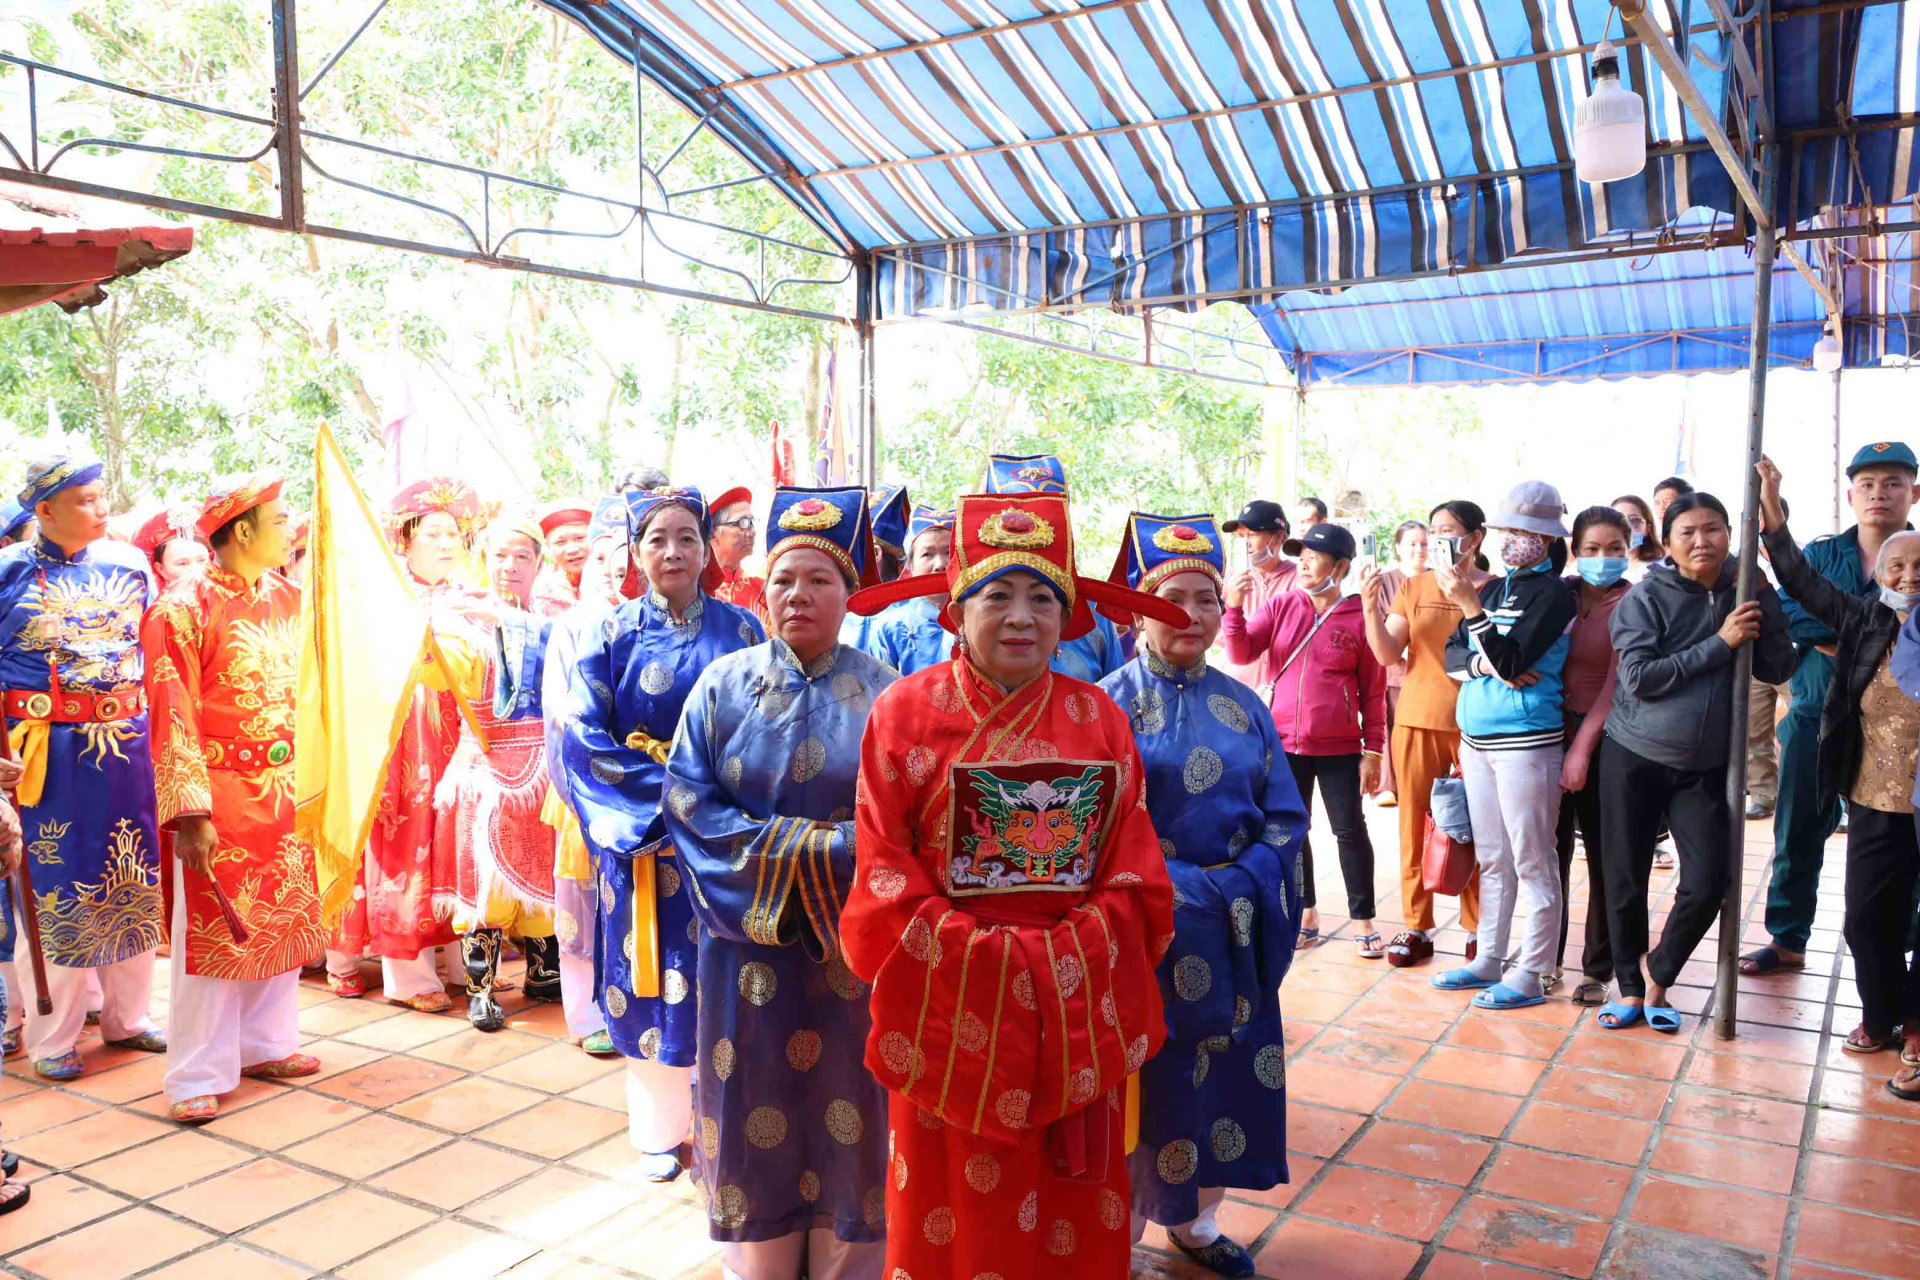 Groups of pilgrims attending Am Chua Festival 2021 